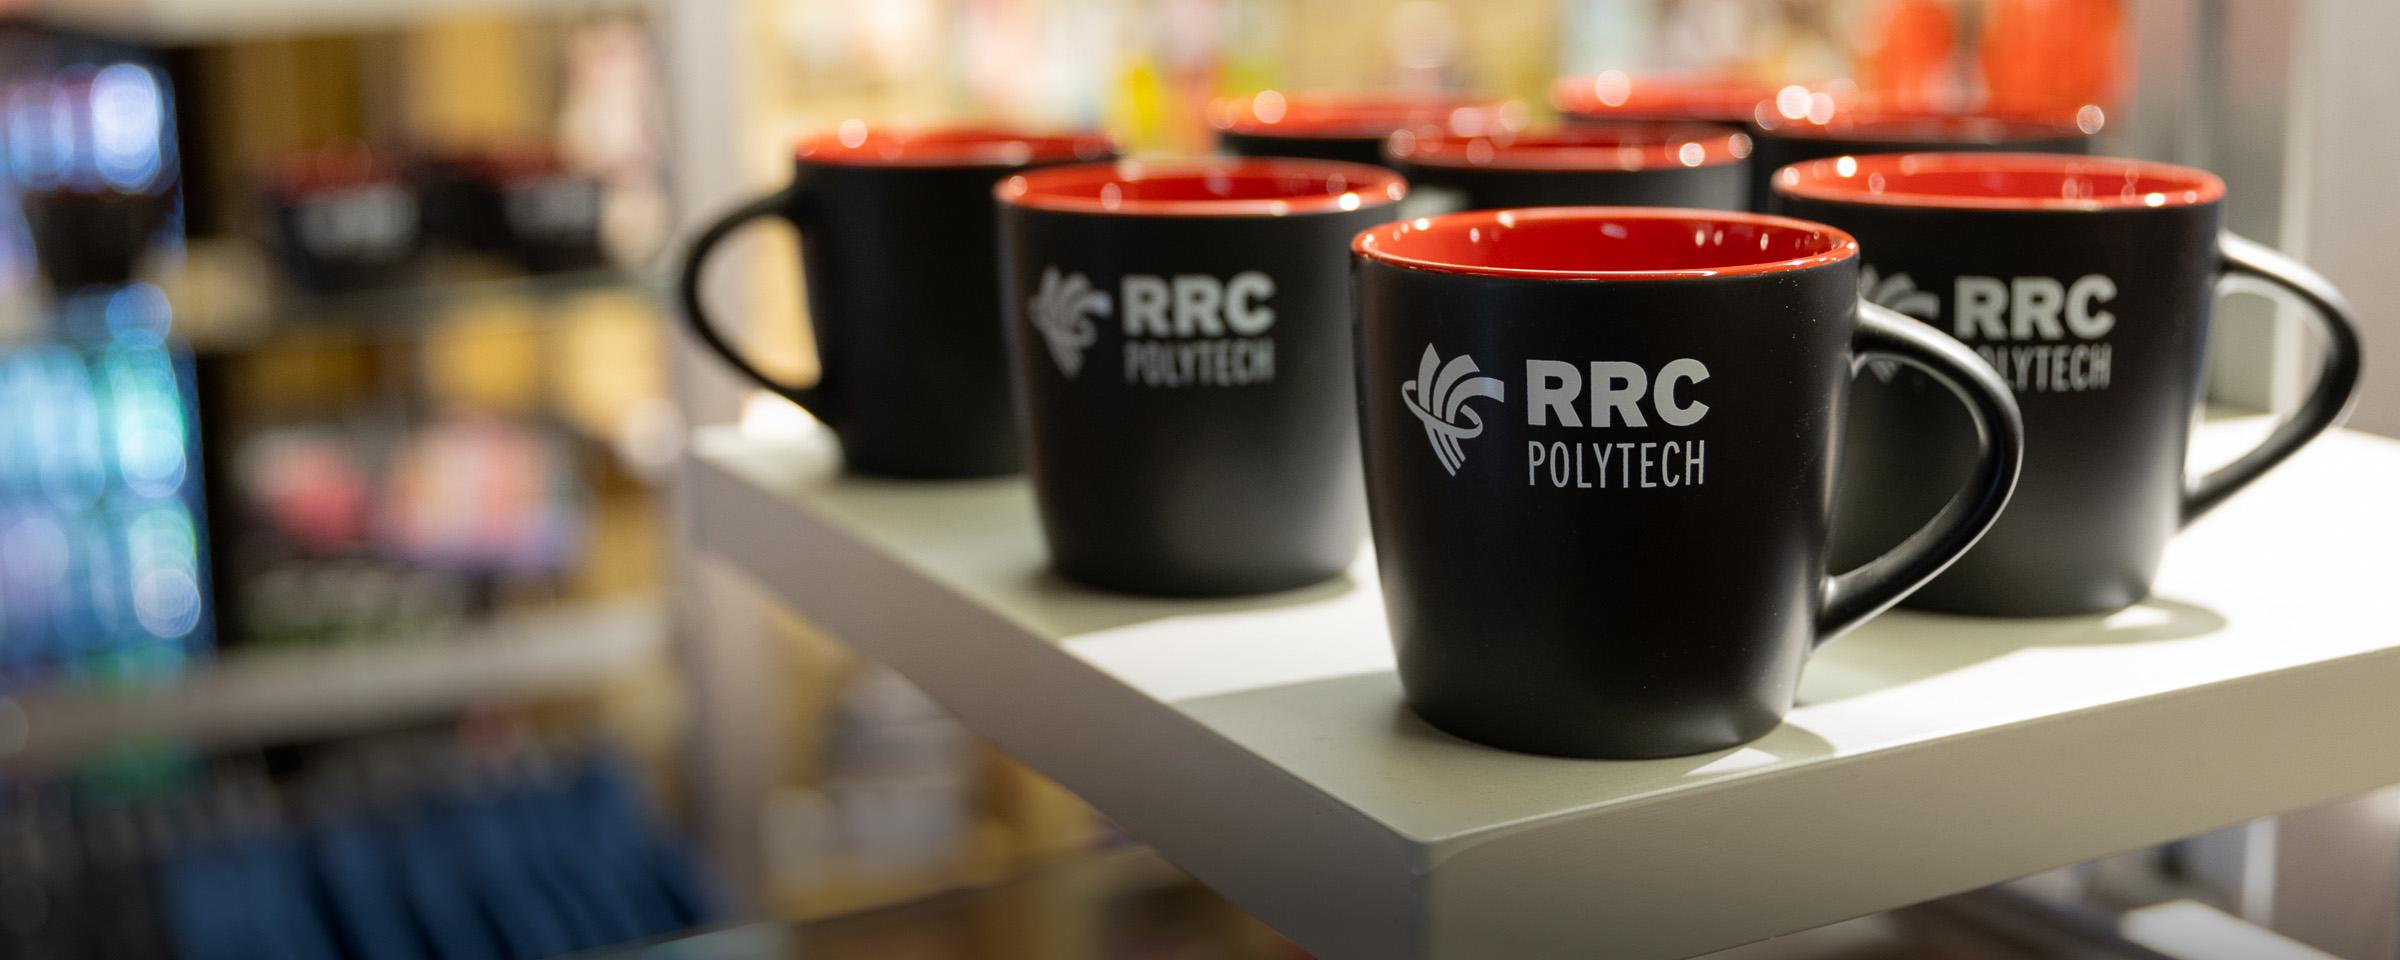 Collection of RRC Polytech coffee mugs on a shelf